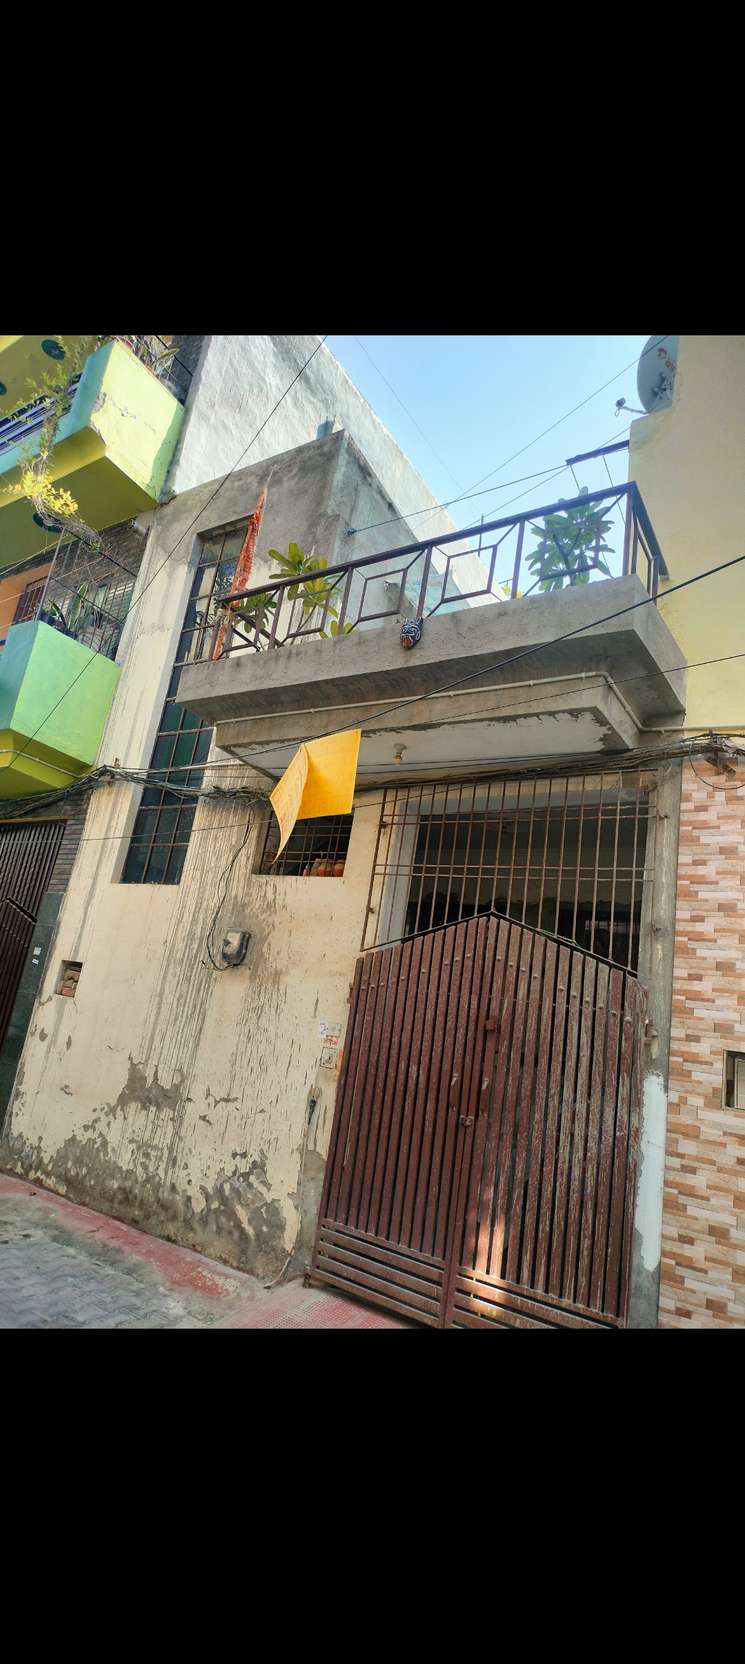 3.5 Bedroom 60 Sq.Yd. Independent House in Laxman Vihar Gurgaon